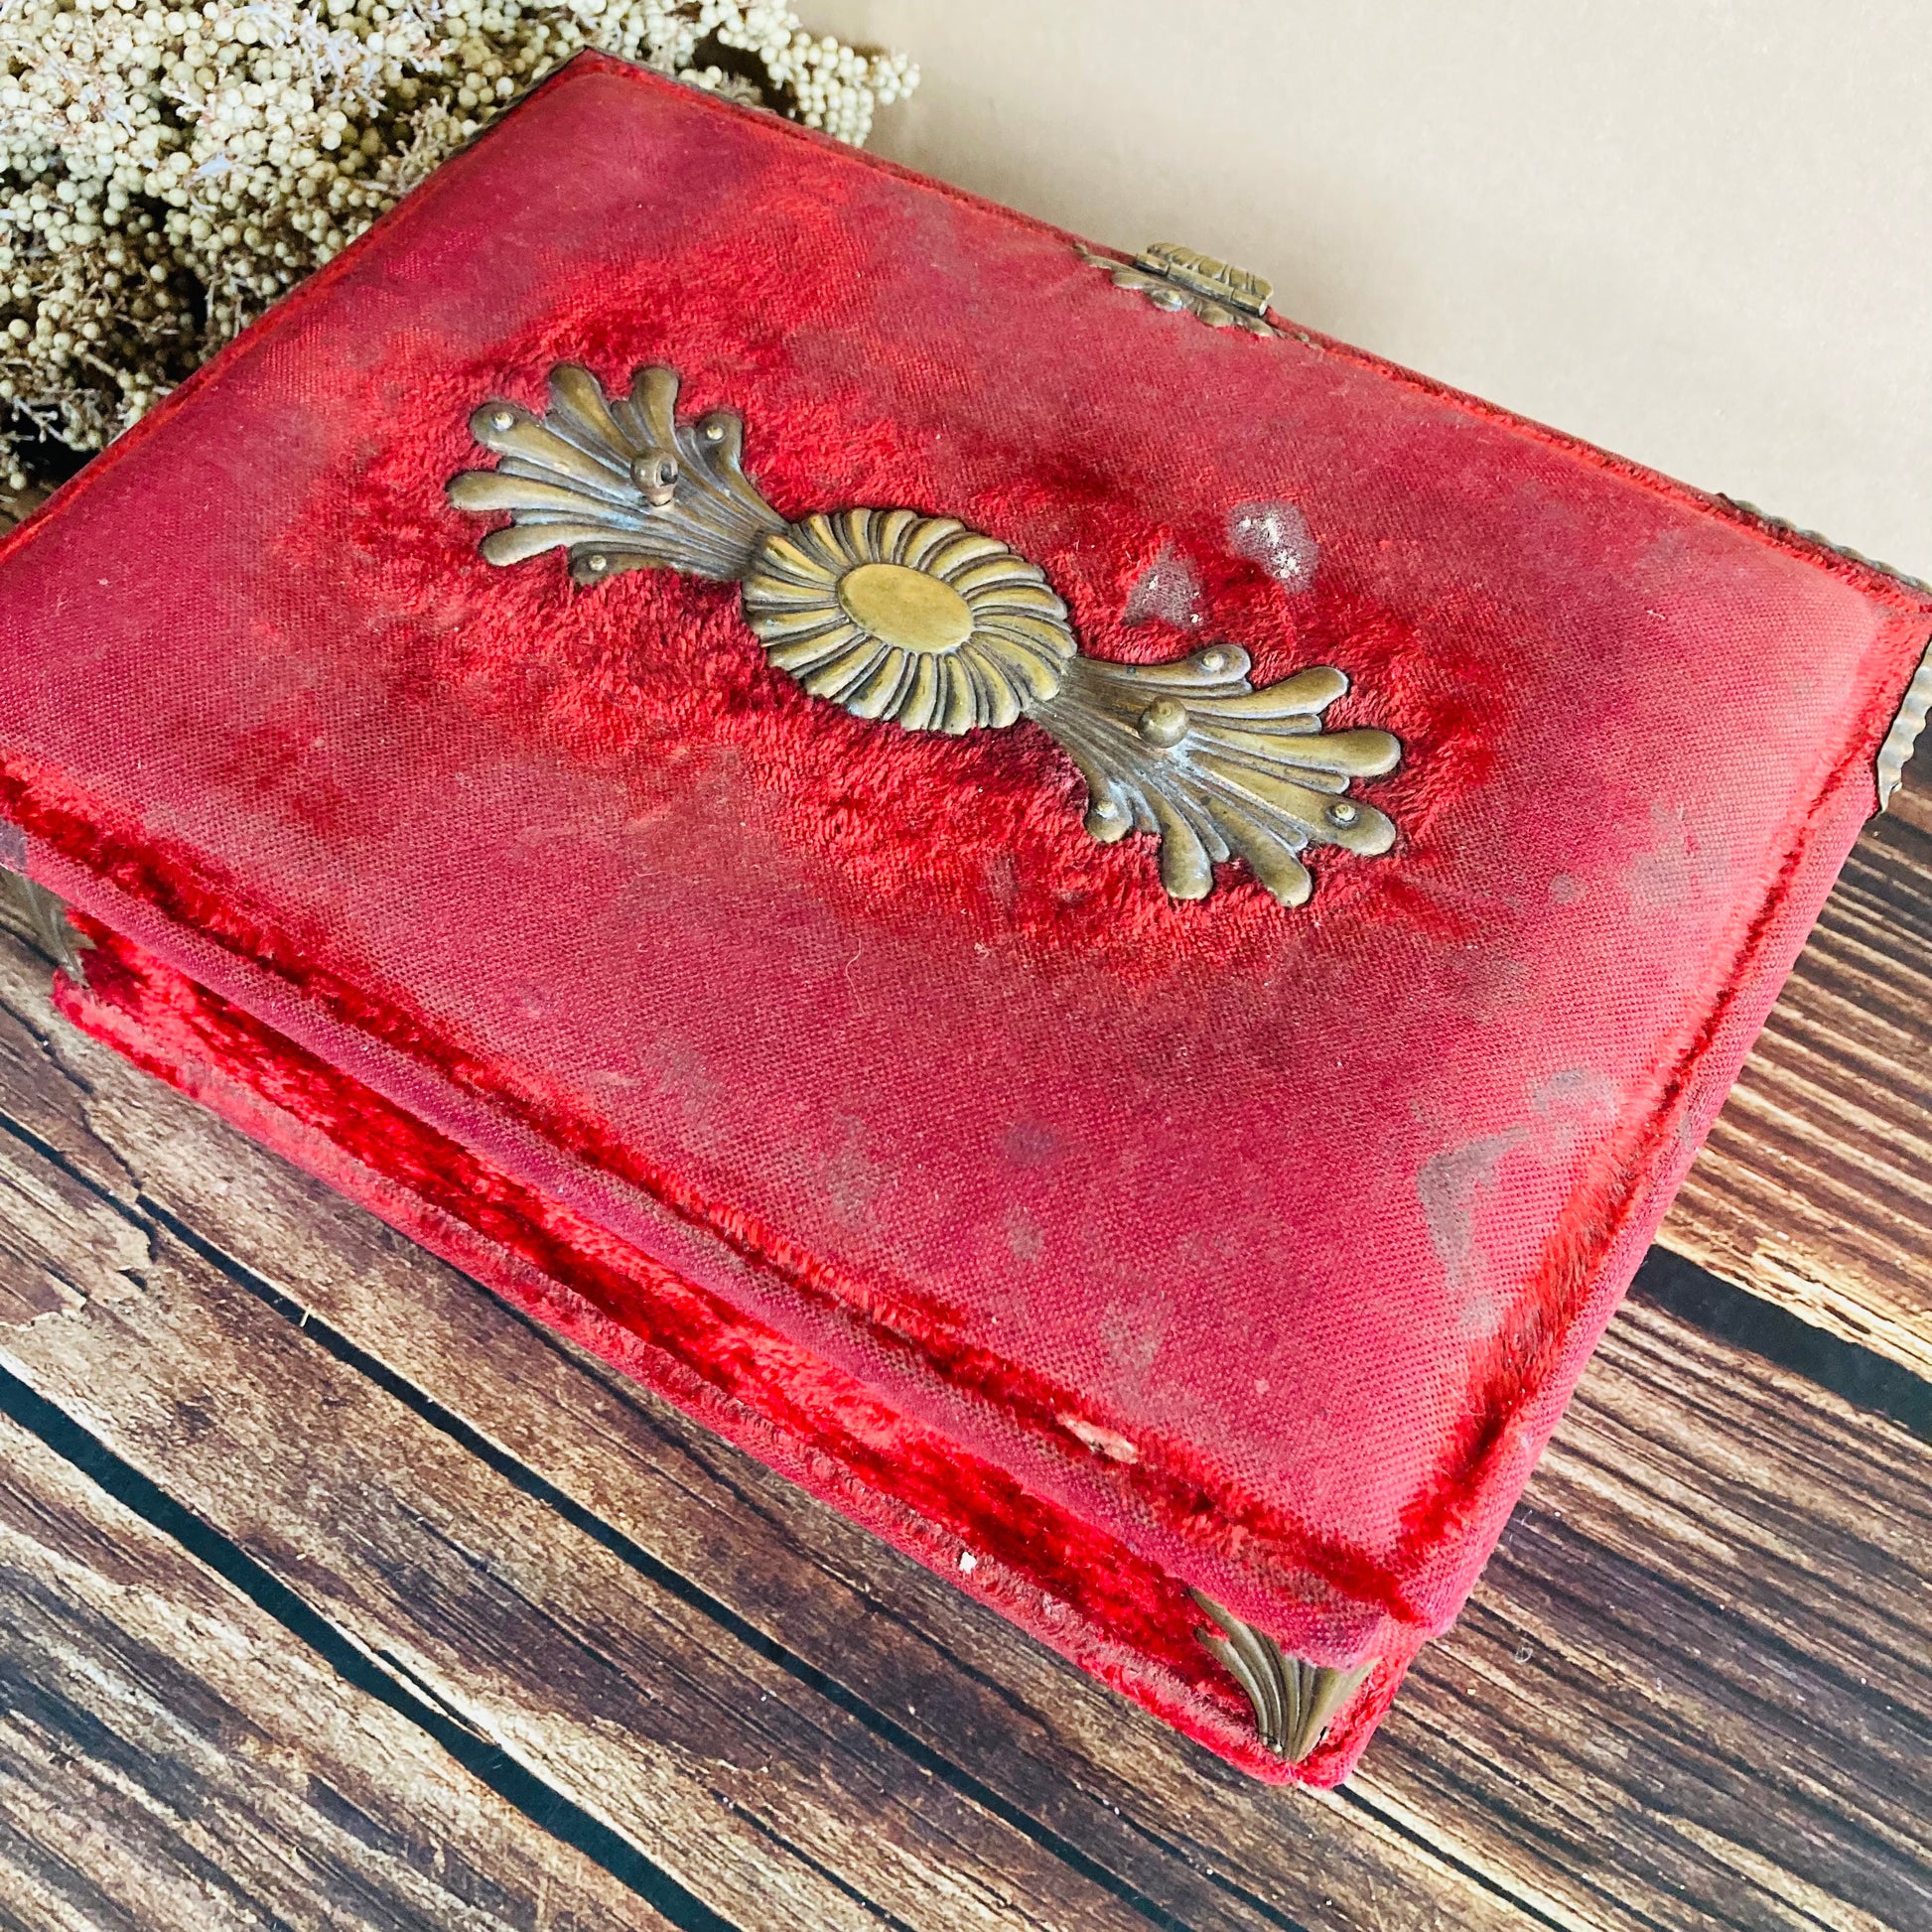 Antique French Red Velvet Jewellery Casket Box | Worn Antique Condition